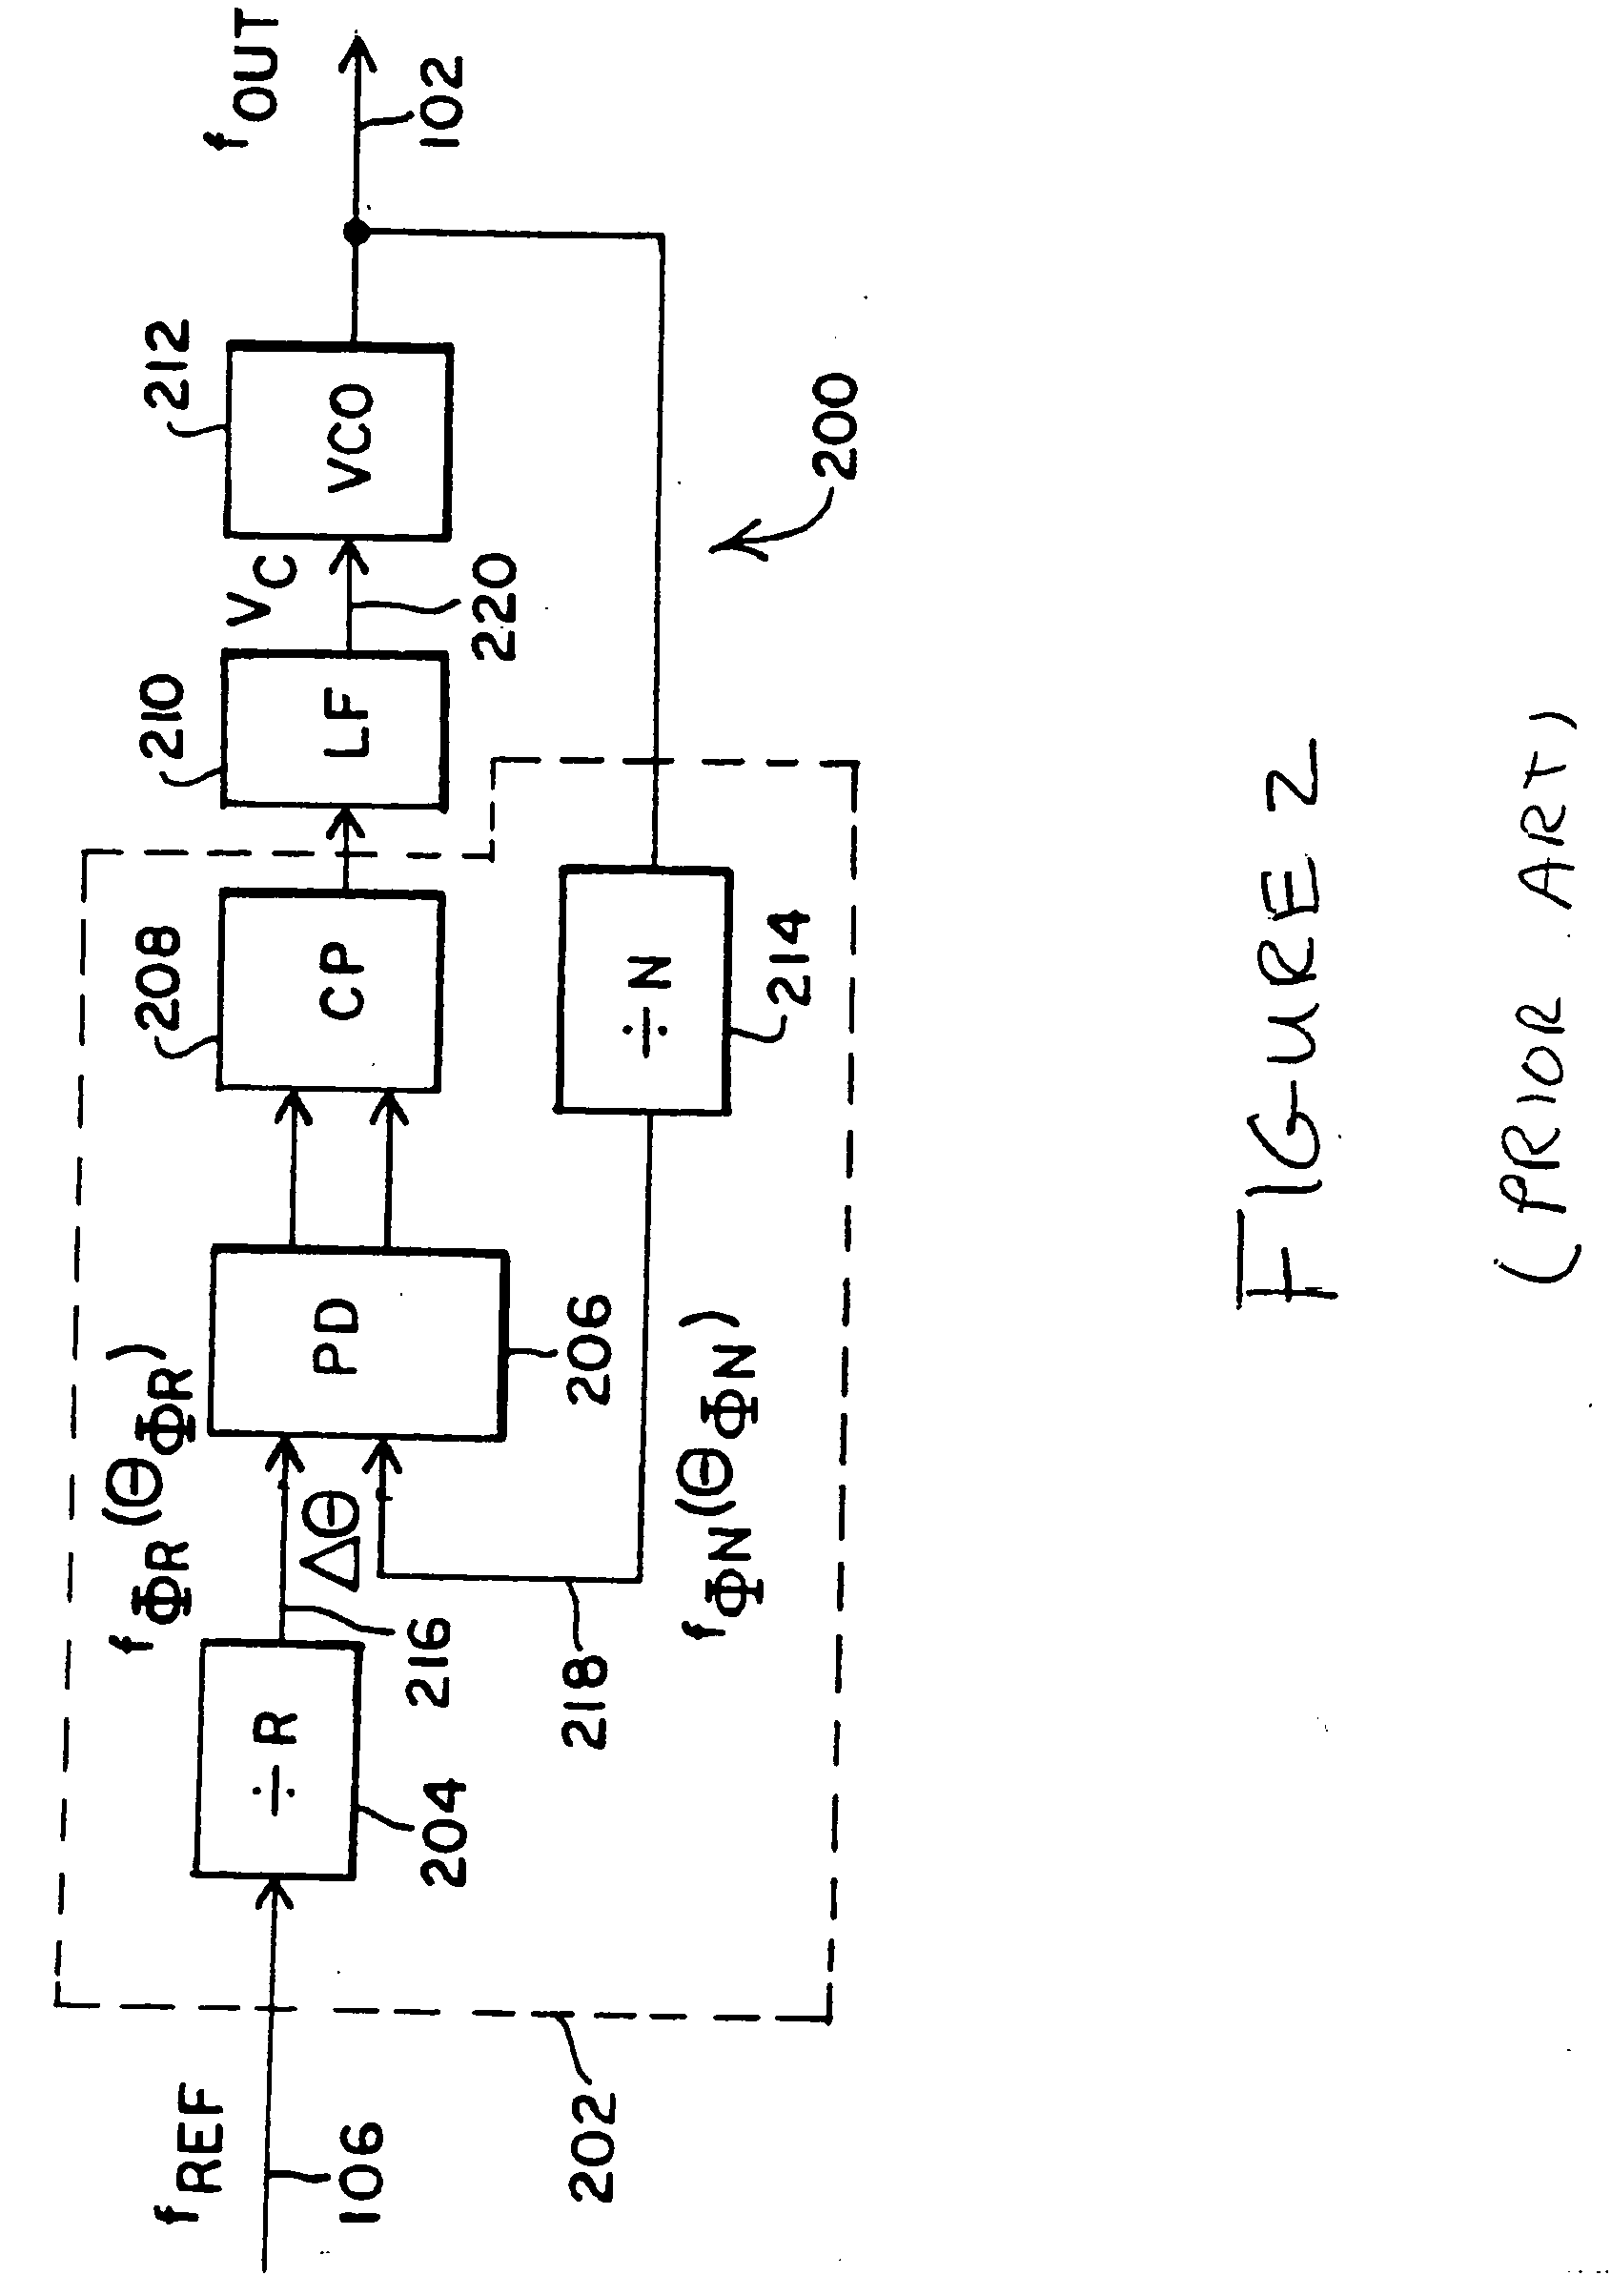 Phase-locked loop bandwidth calibration circuit and method thereof